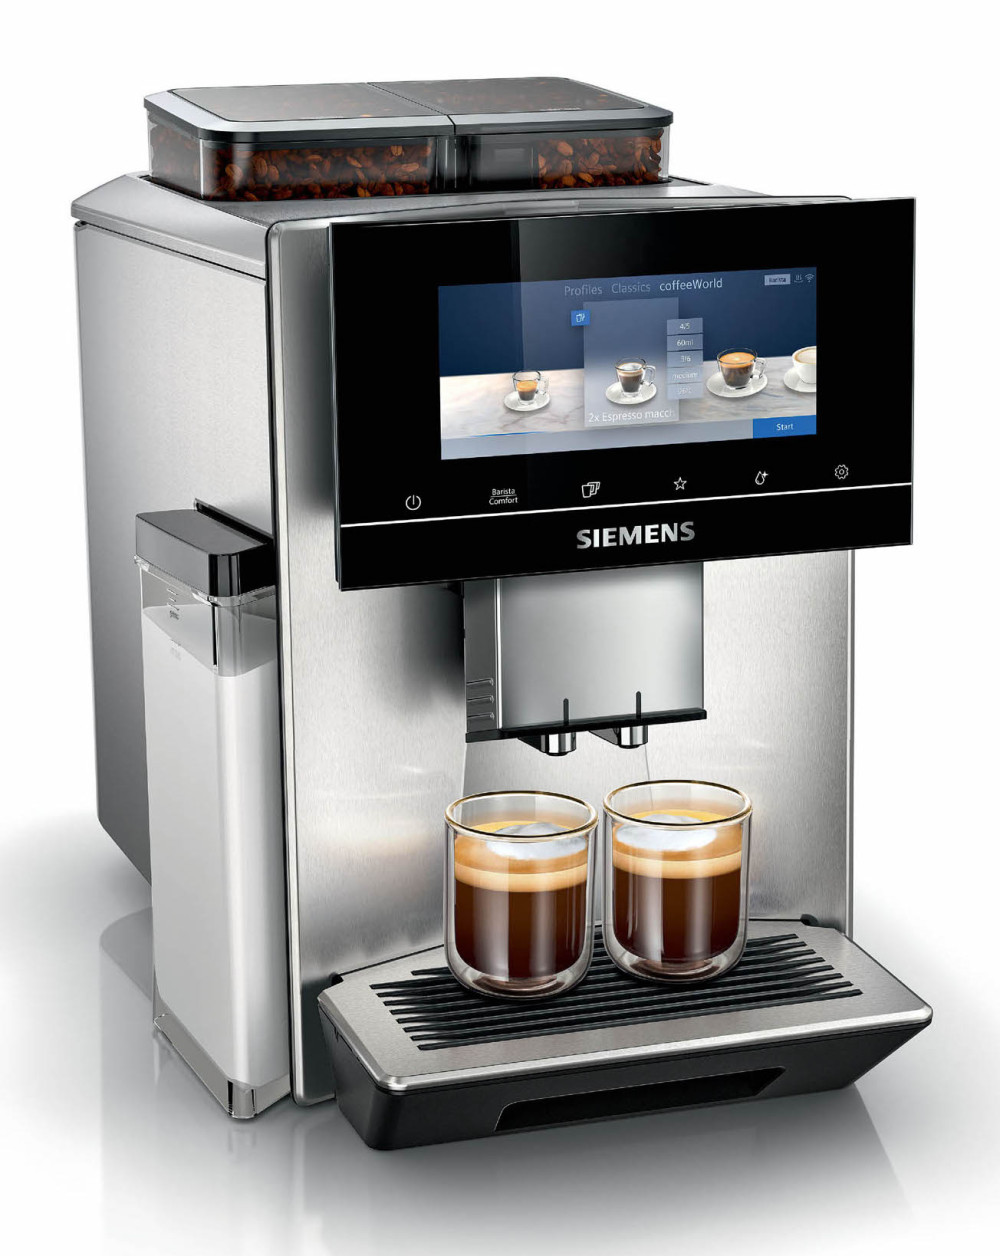 Siemens TQ907GB3 EQ900 Bean to Cup Coffee Machine featured image